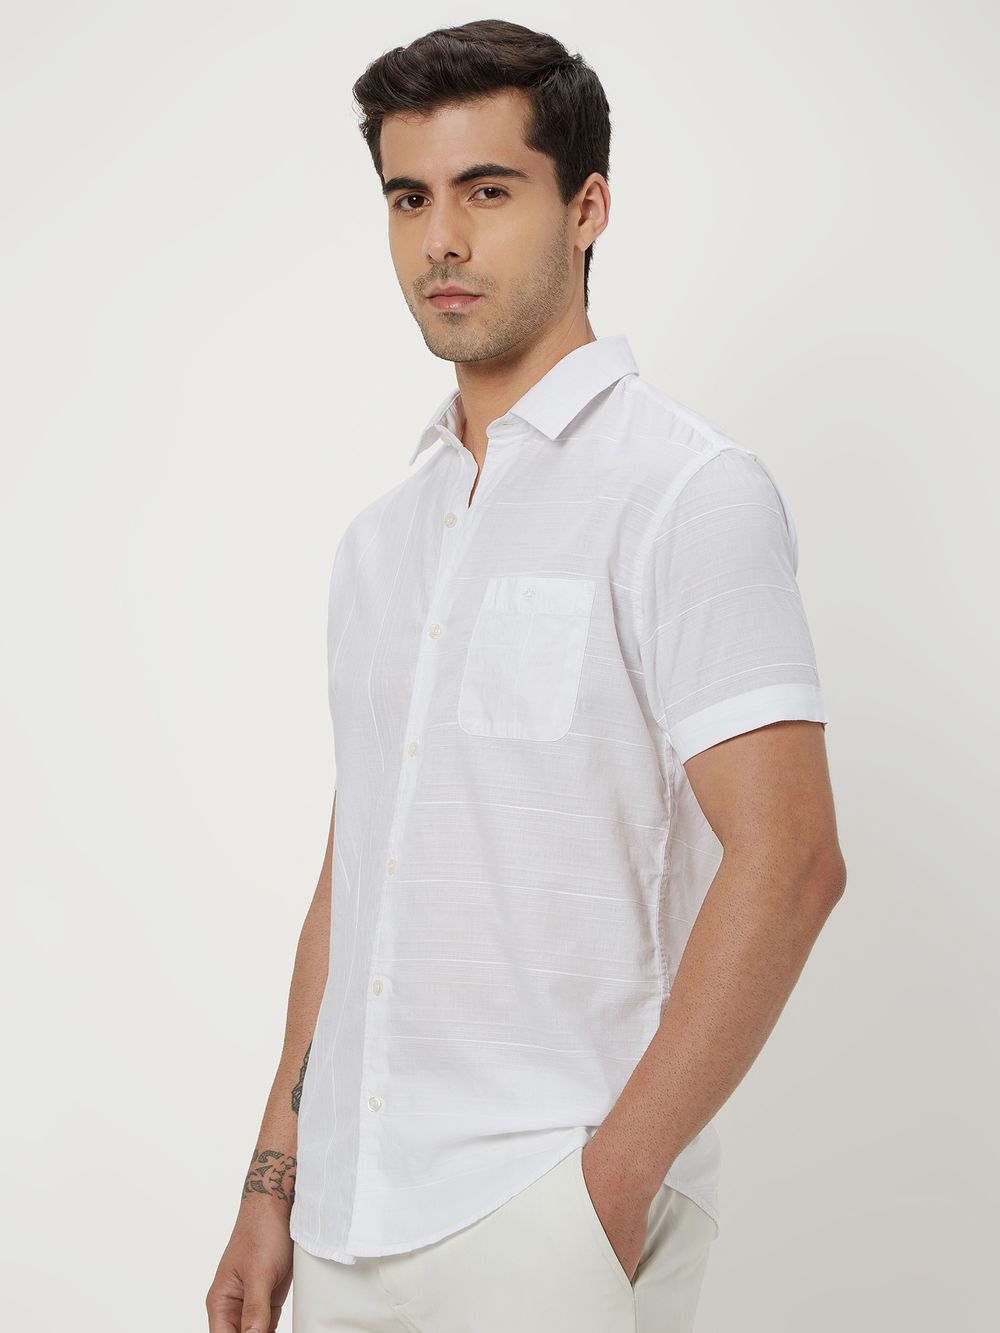 White Textured Plain Dobby Shirt